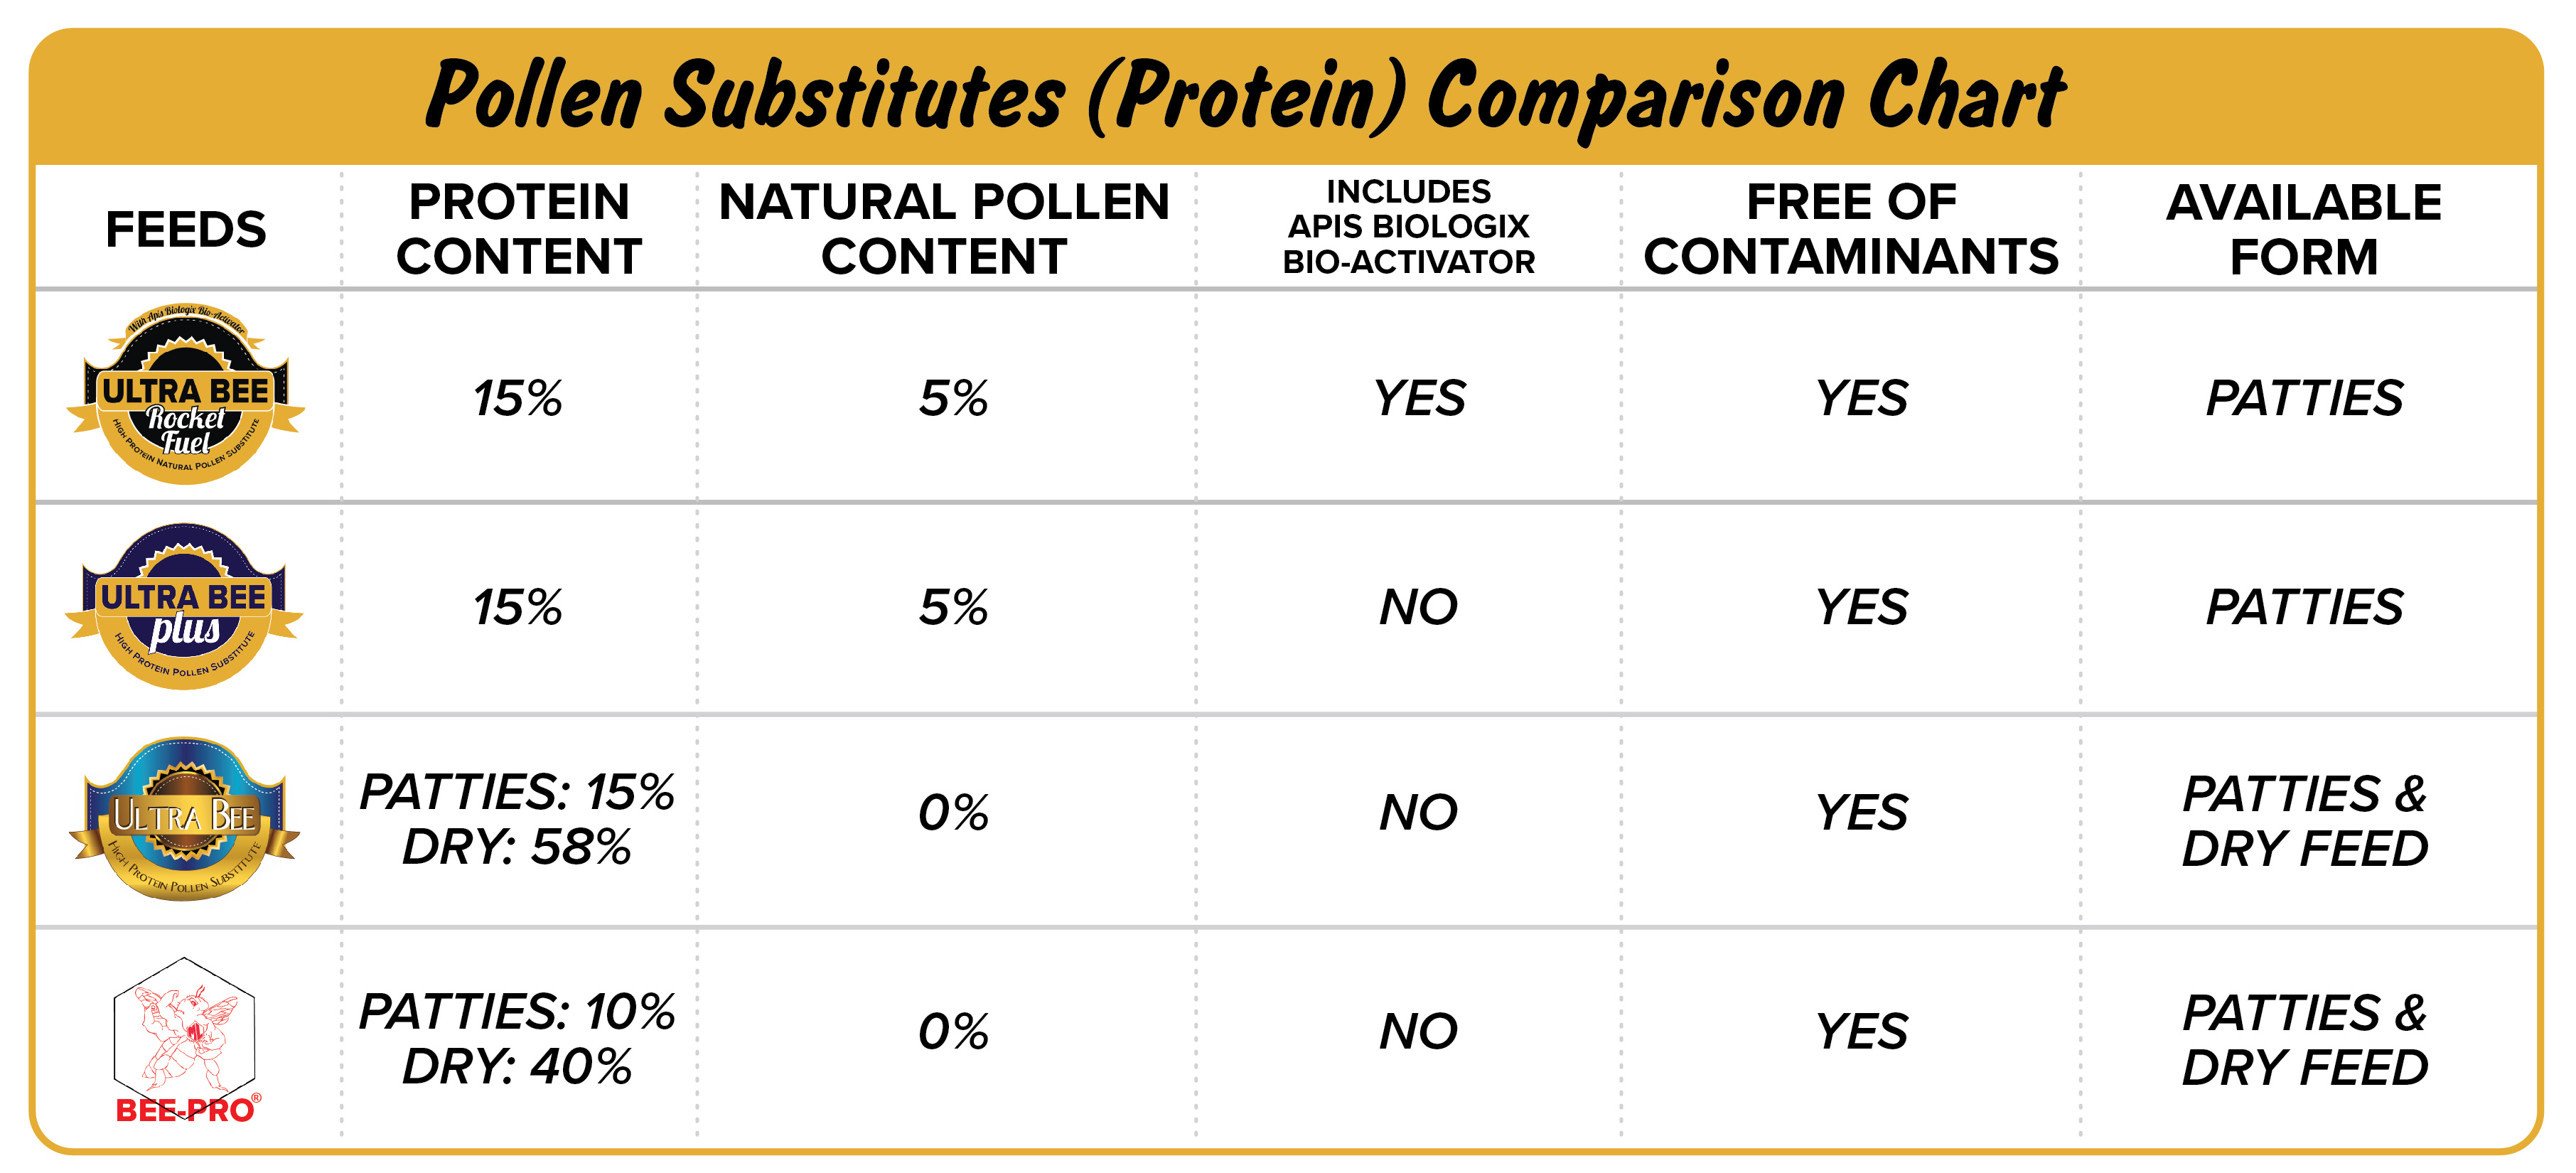 Pollen Substitutes (Protein) Comparison Chart